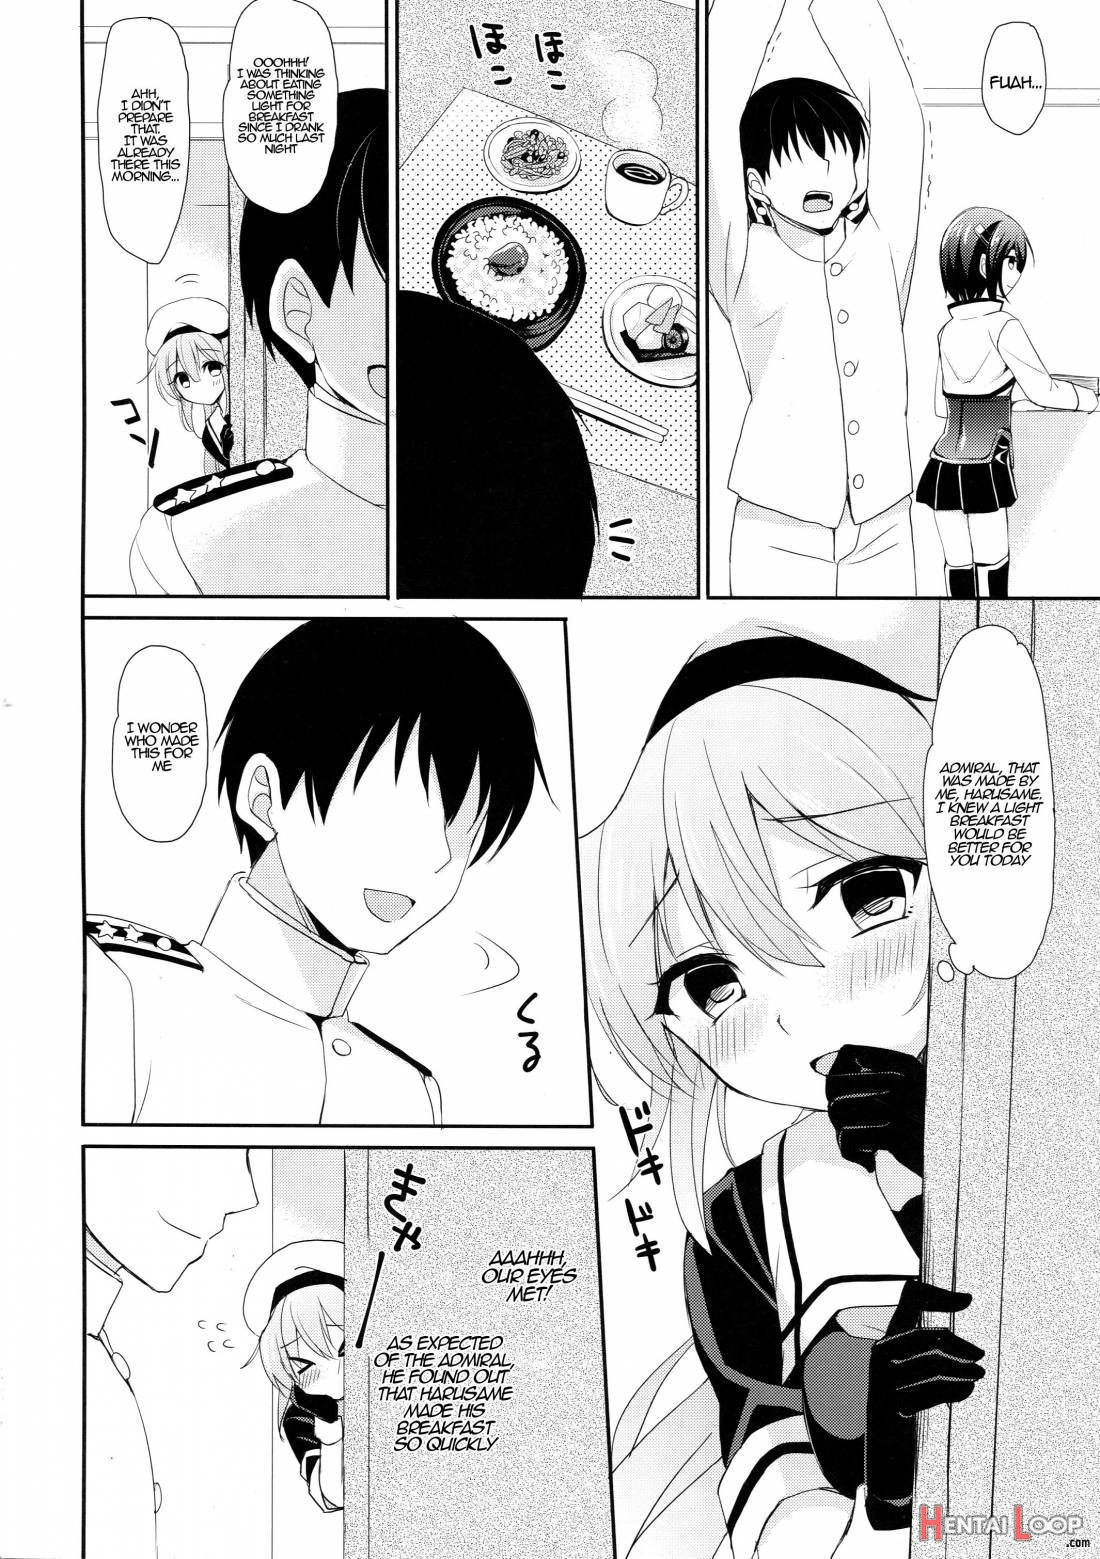 Stalker Harusame-chan page 3